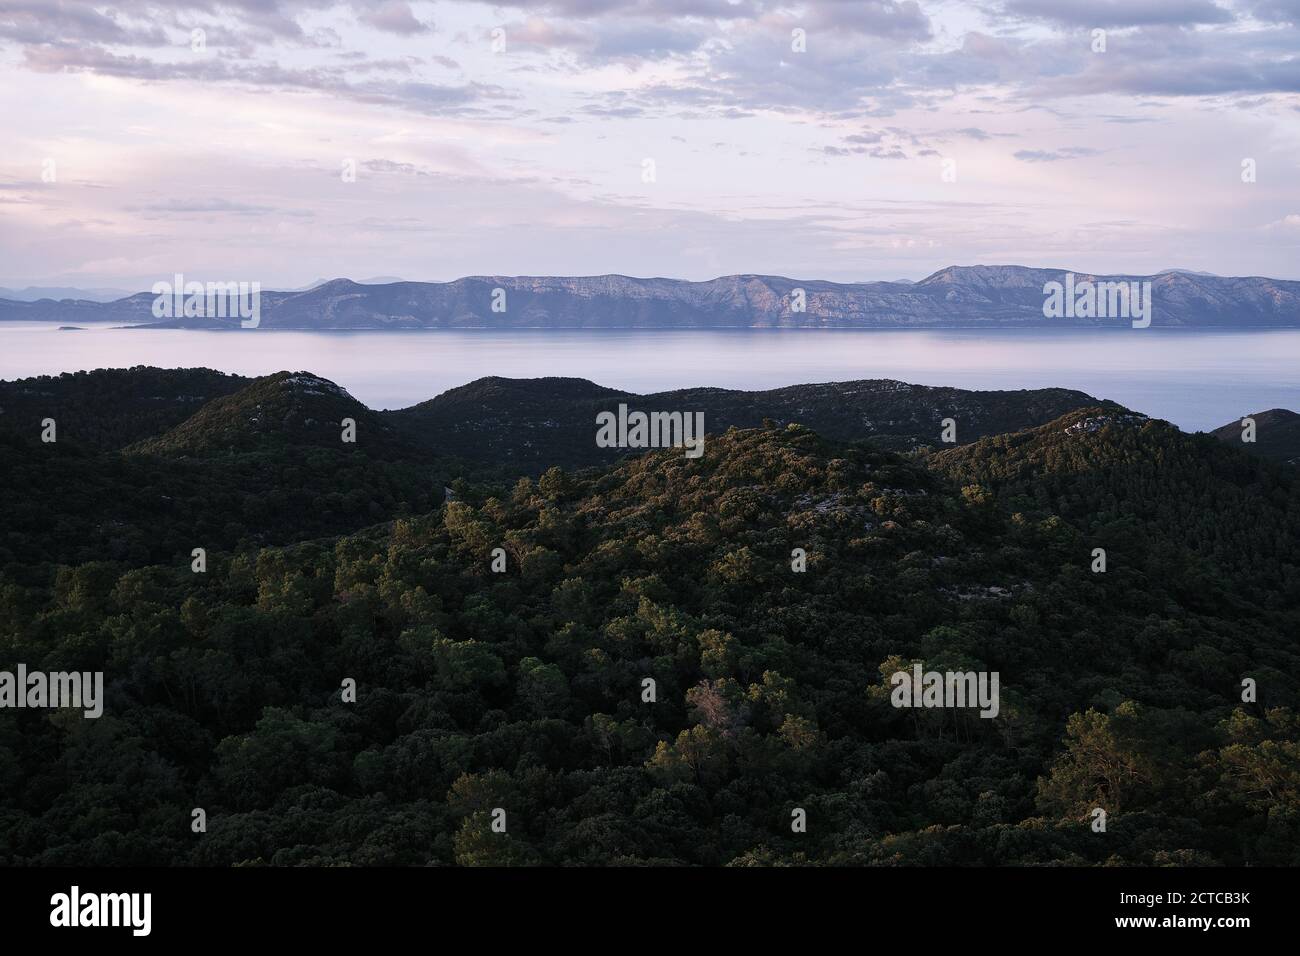 View over the island of Mljet on the Adriatic sea, Croatia Stock Photo